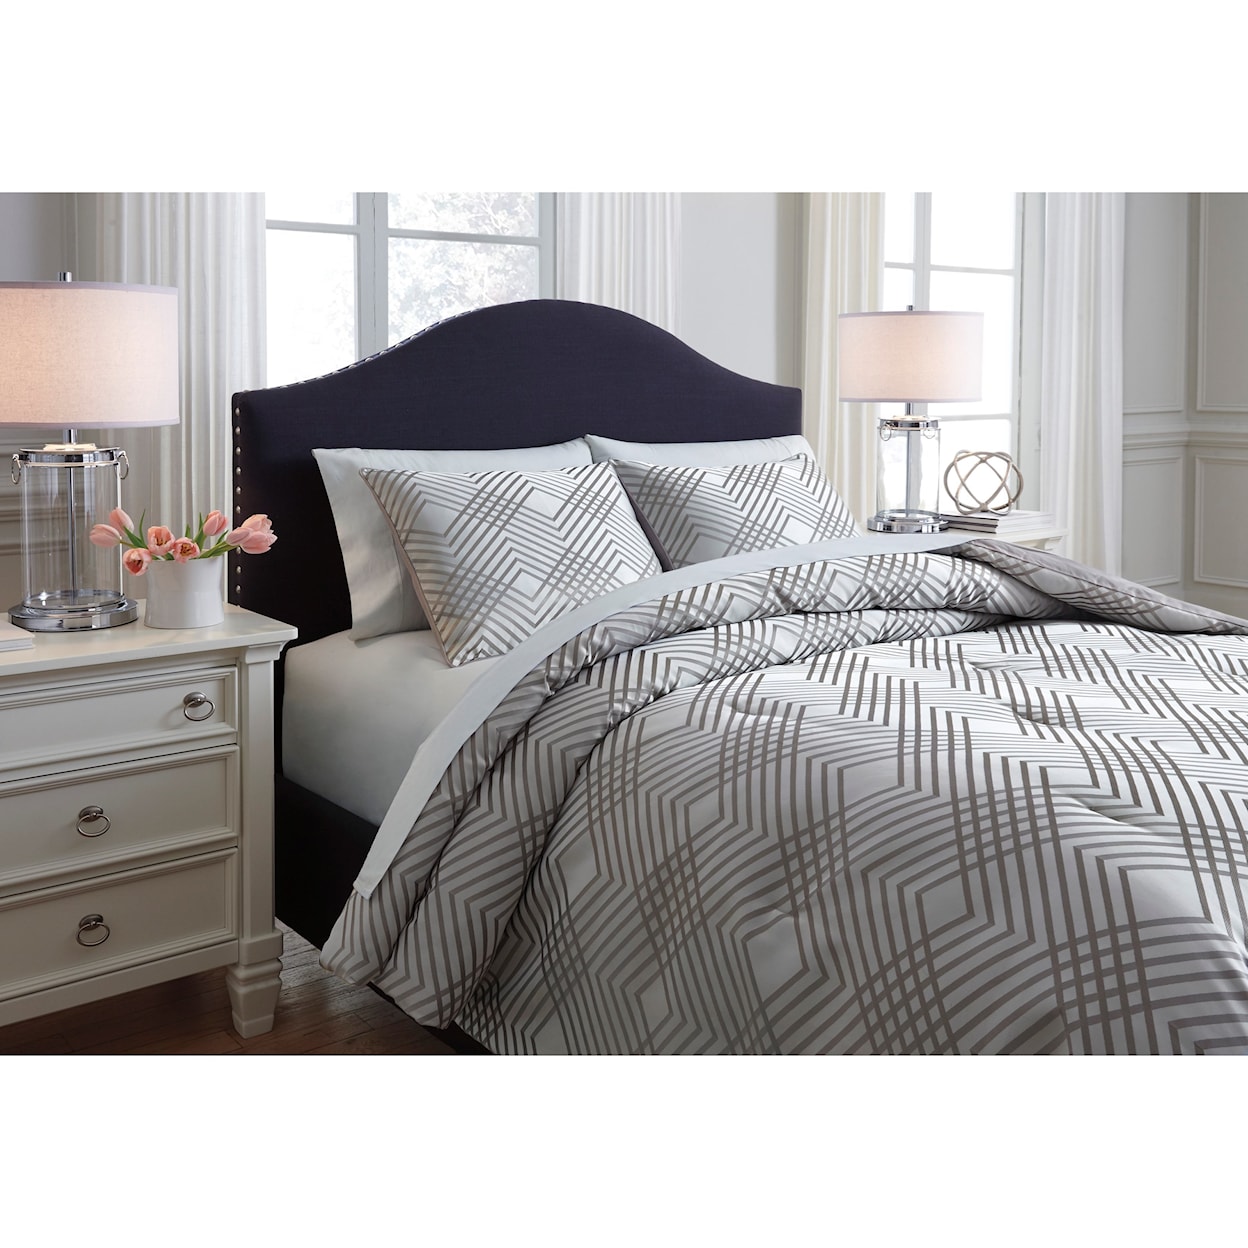 Ashley Furniture Signature Design Bedding Sets Queen Anjelita Pewter Comforter Set